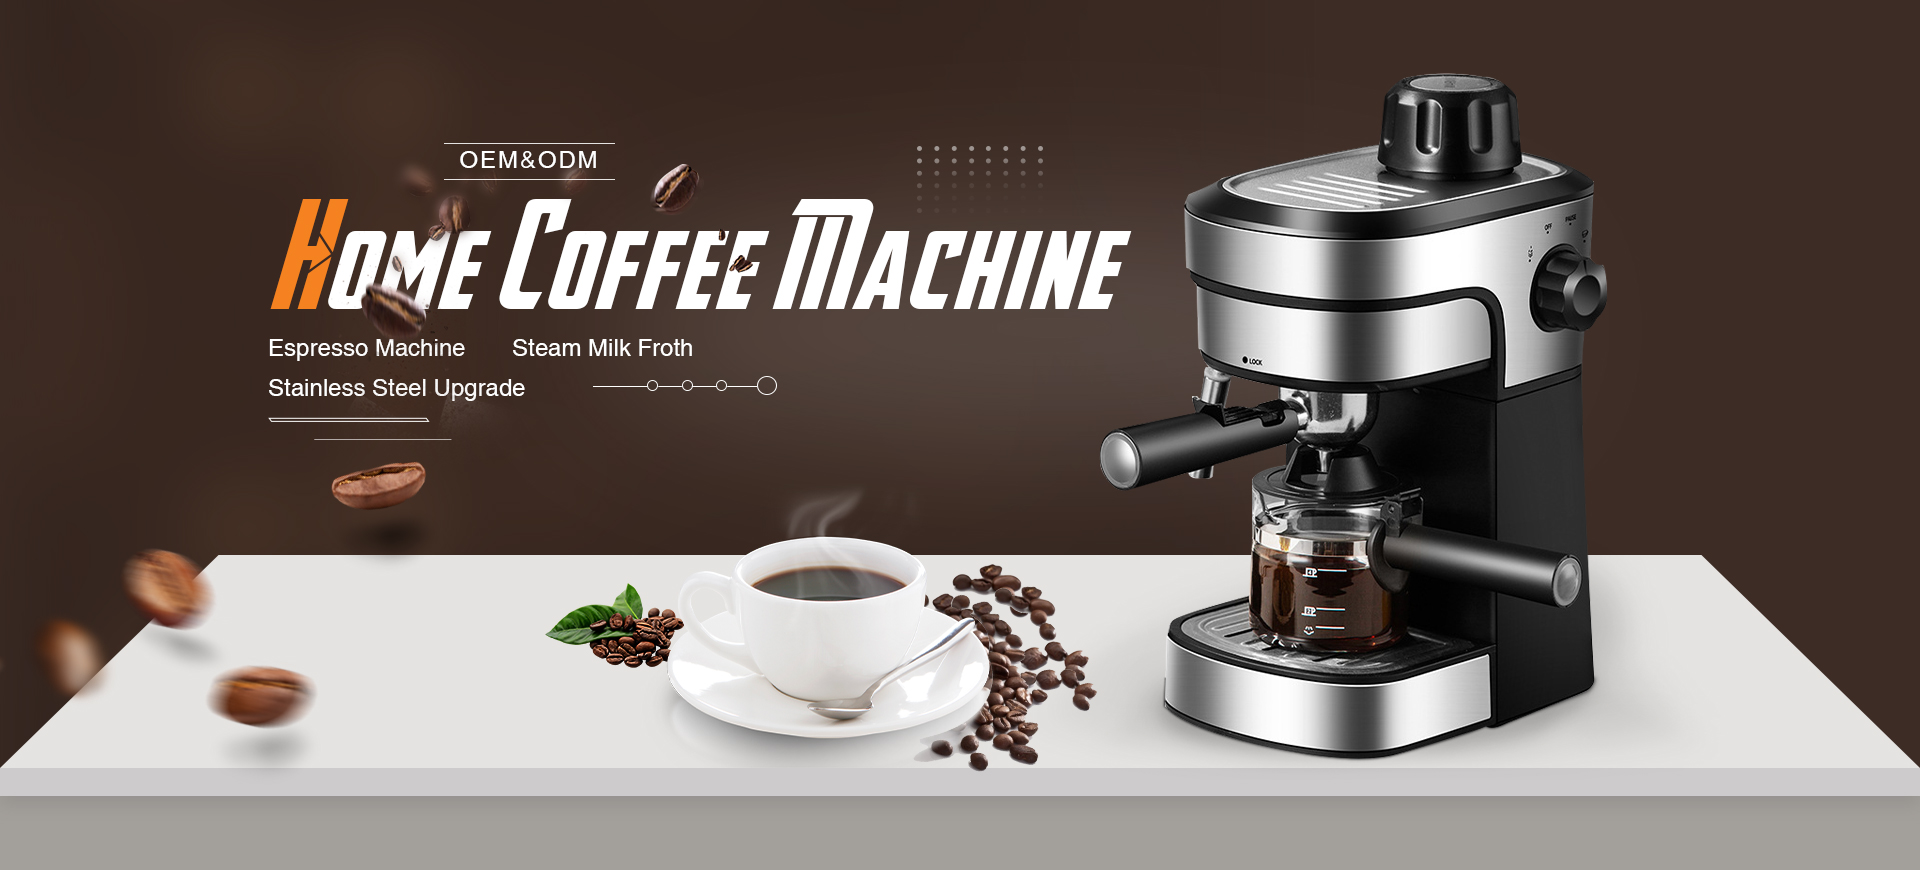 La mejor máquina de café casera